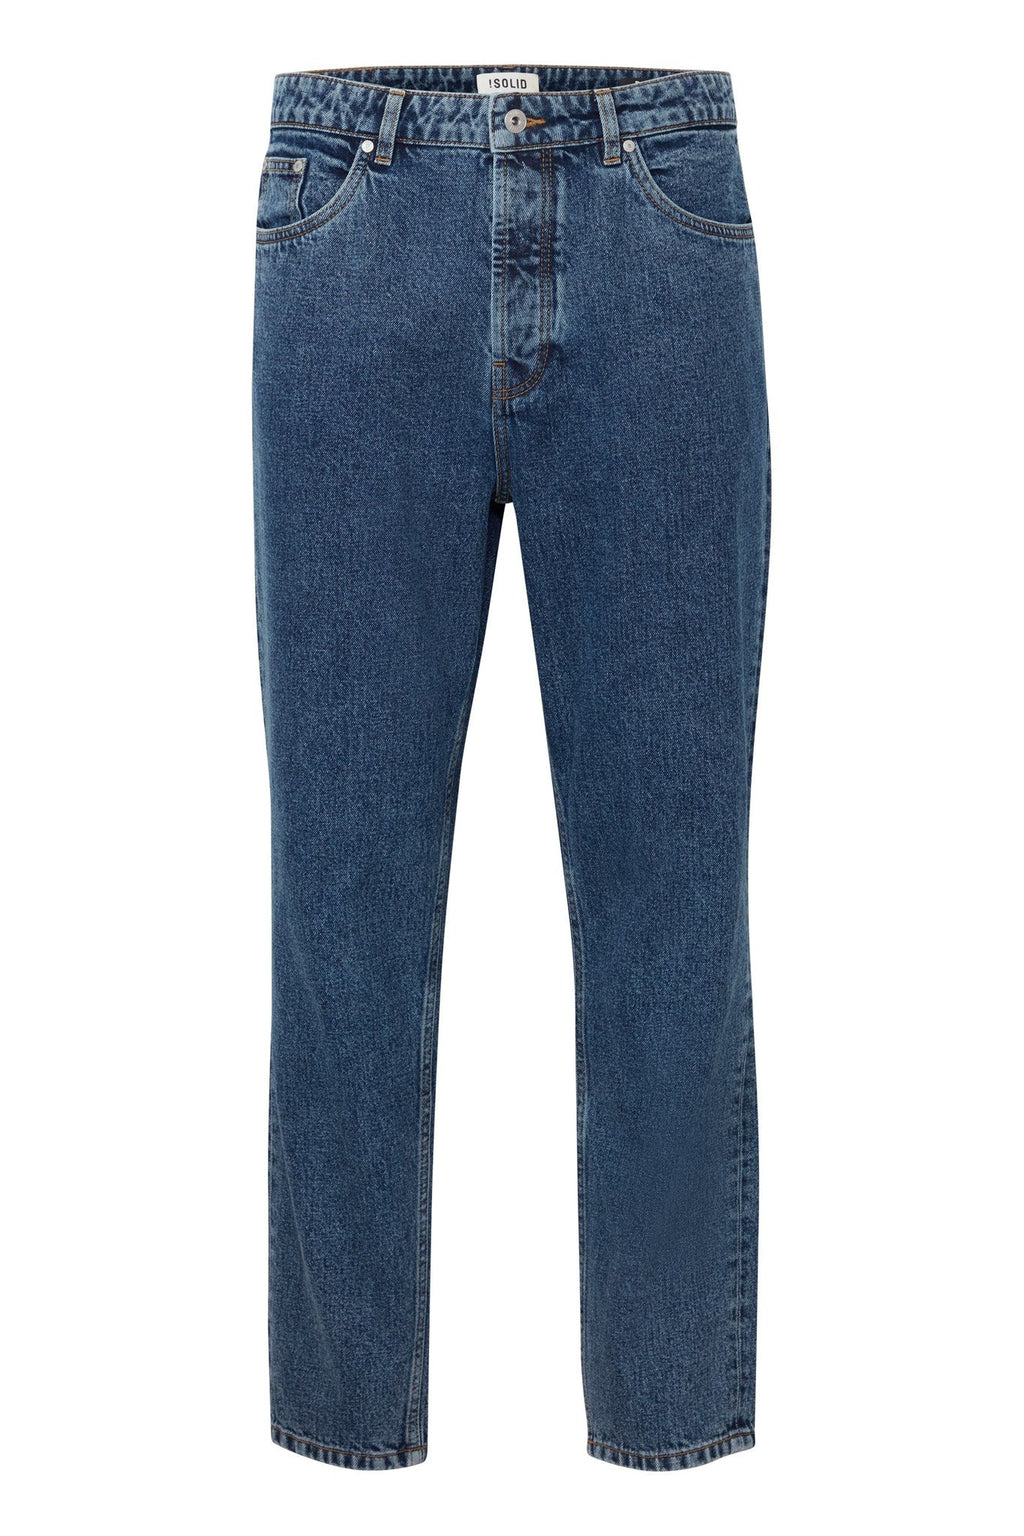 „Dylan Dad Fit Jeans“ - mėlynas džinsinis audinys